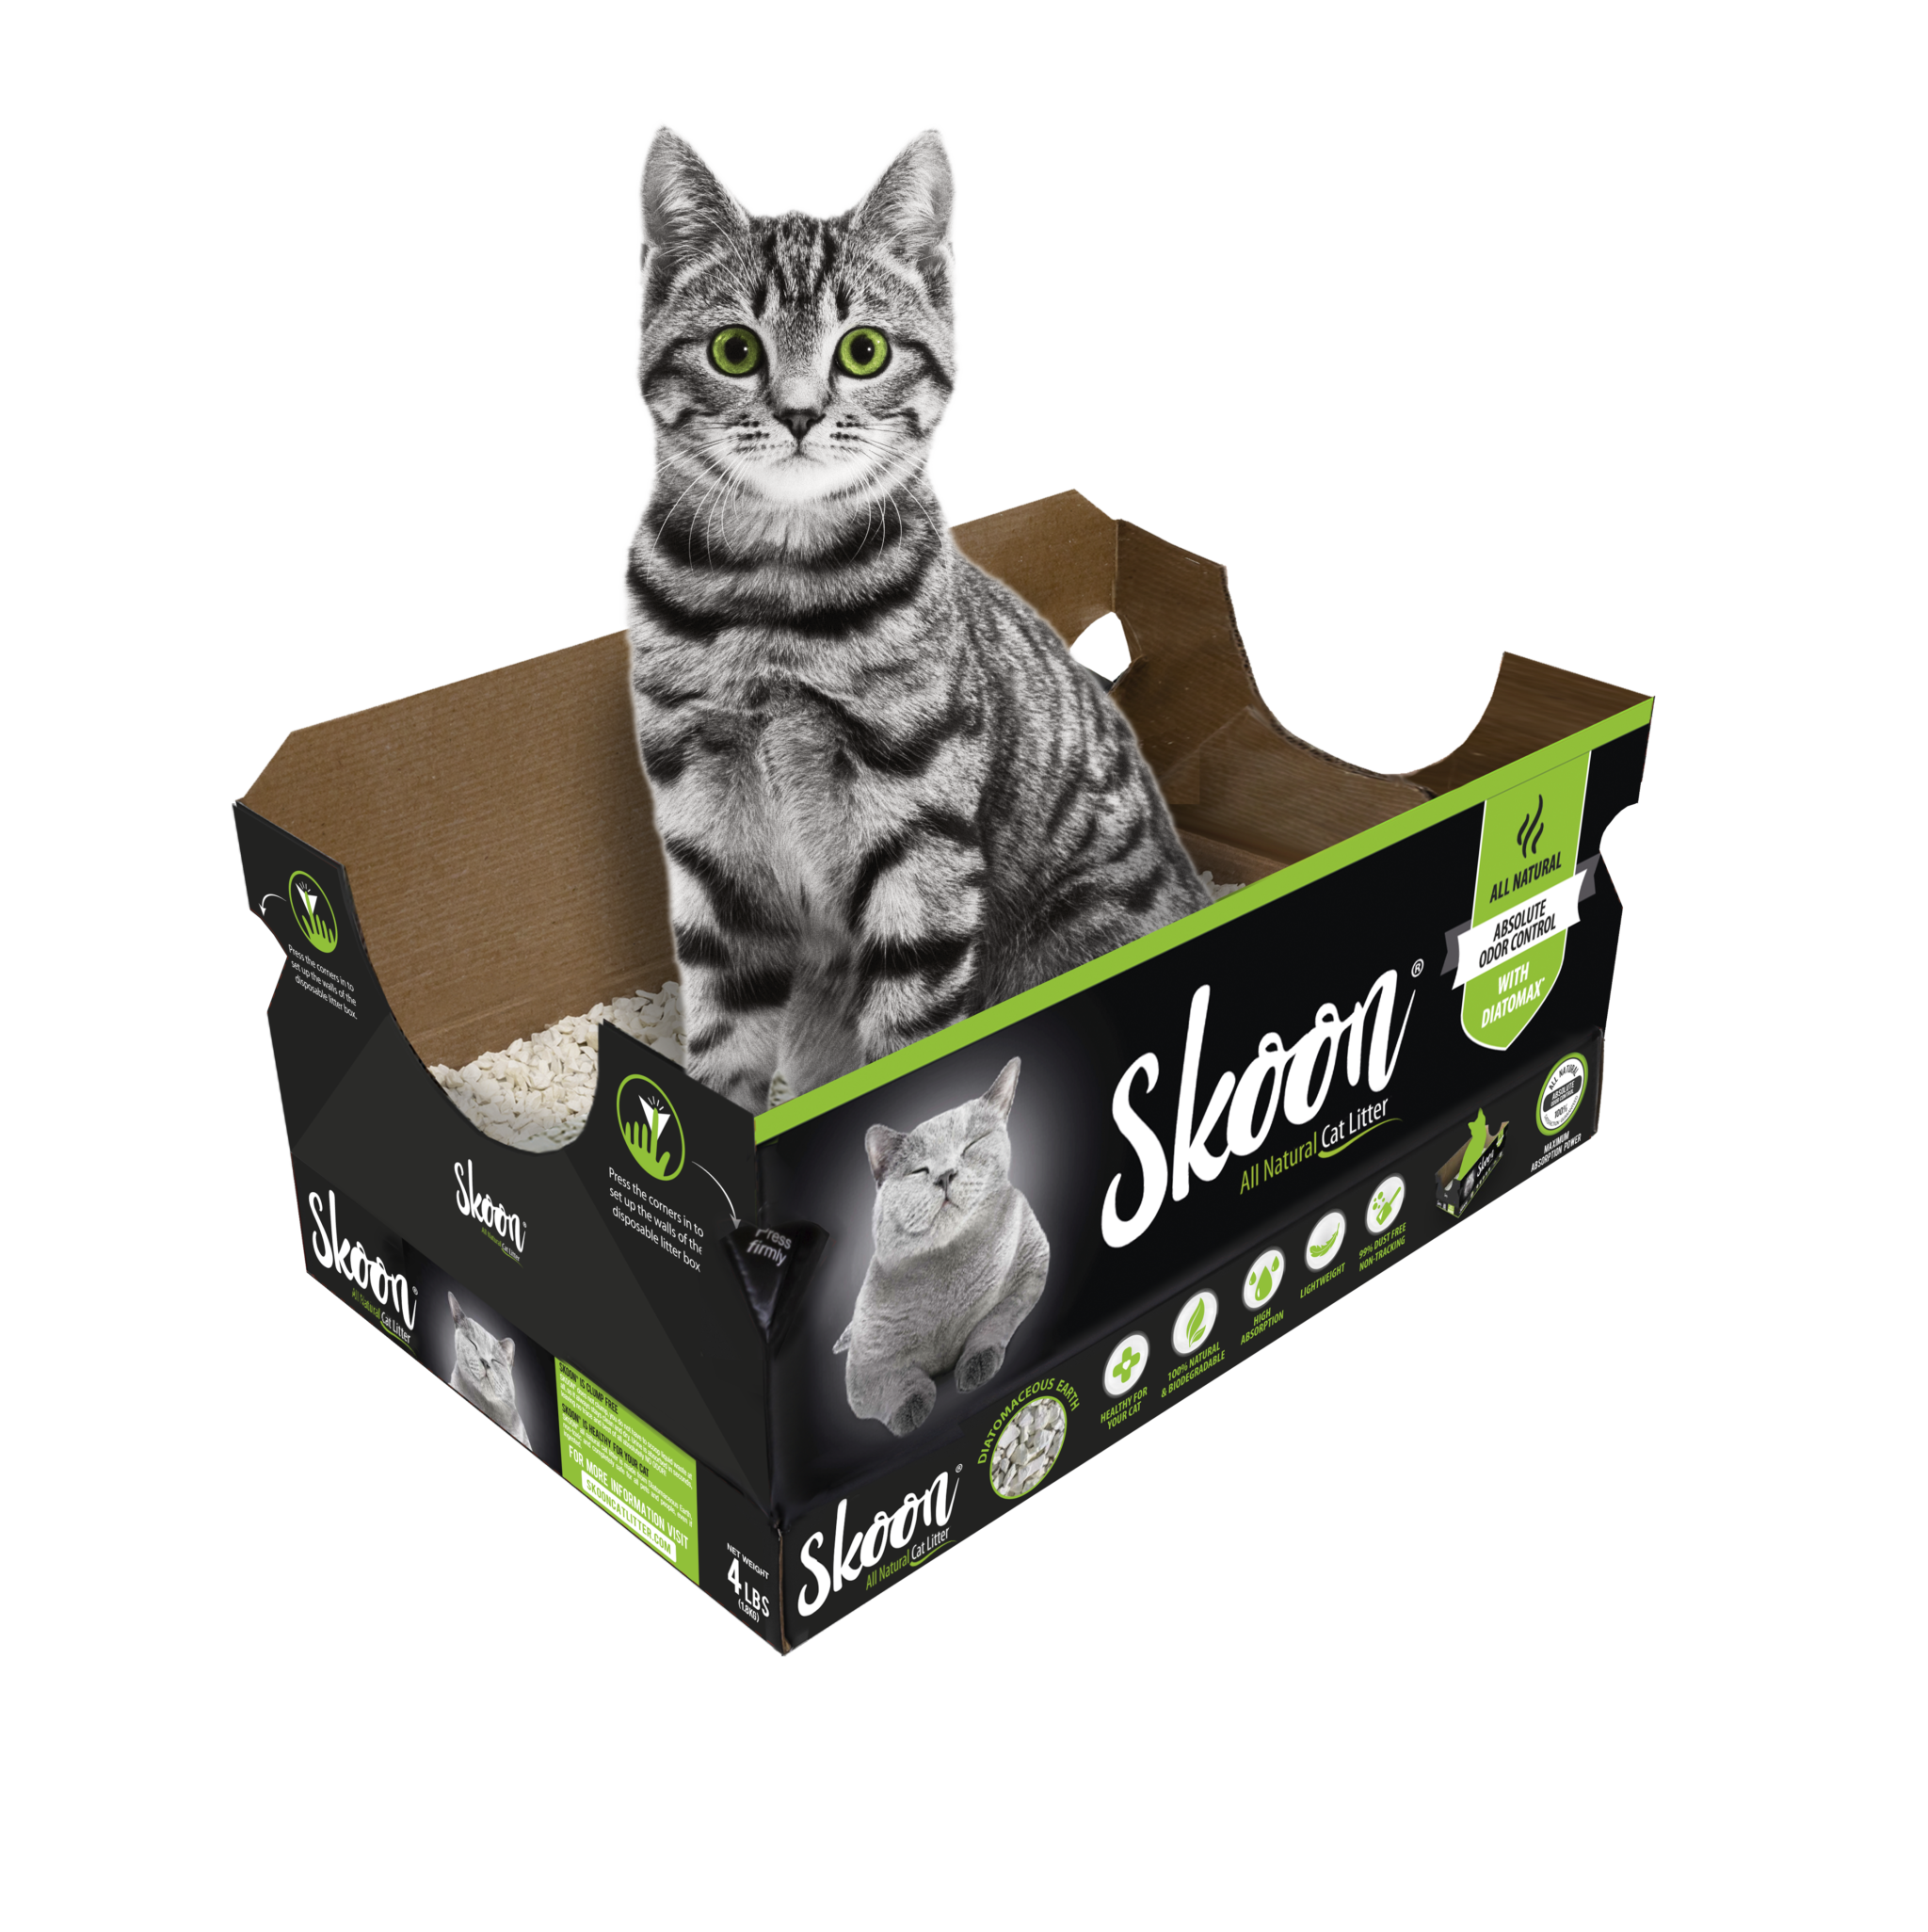 Cat sitting inside box of Skoon cat litter